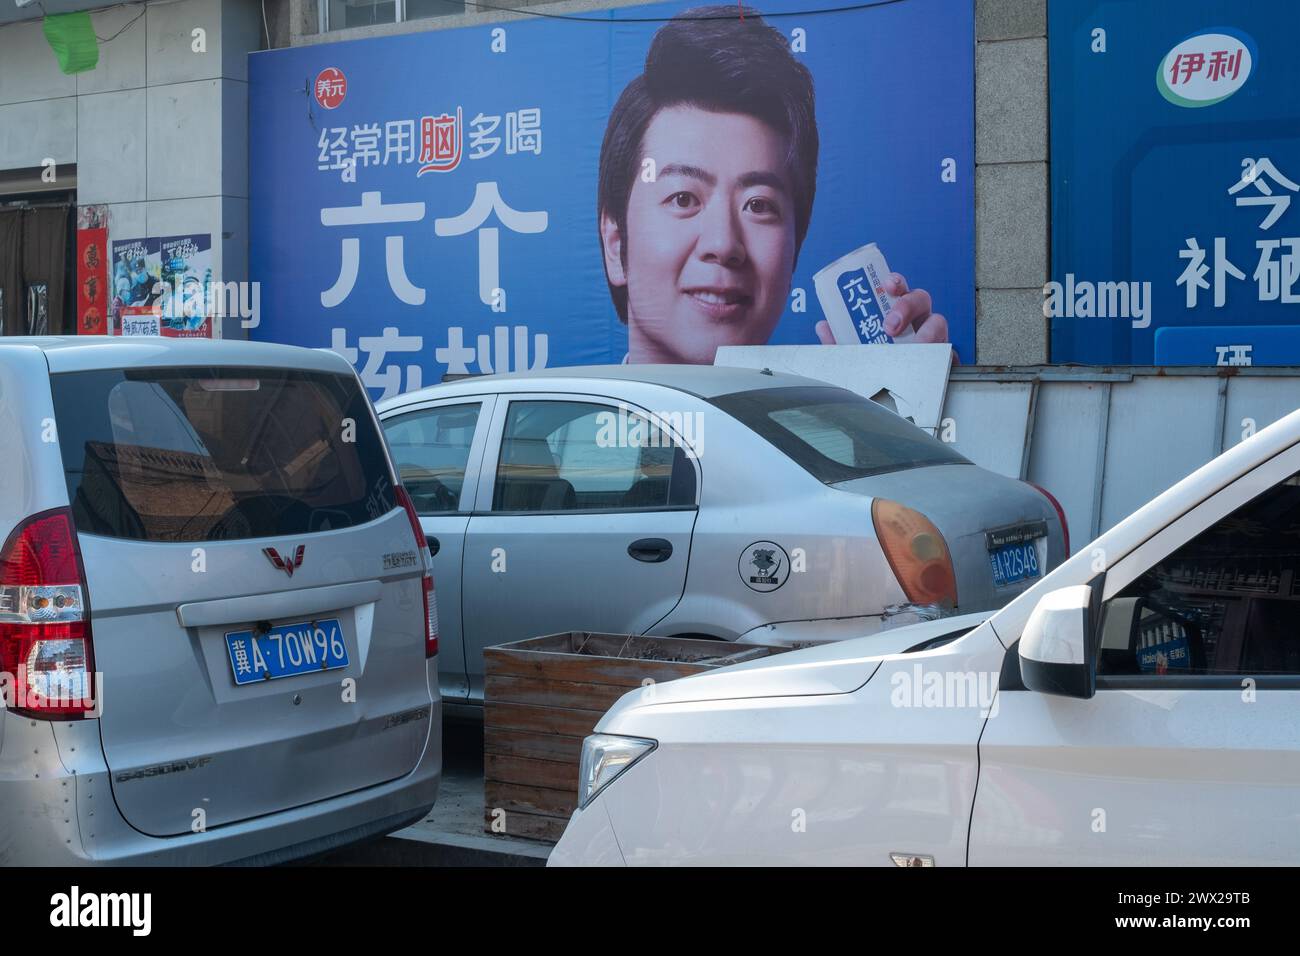 Der chinesische Pianist lang lang erscheint in einer Anzeige in der Stadt Jingxing, Shijiazhuang, Hebei, China. Stockfoto